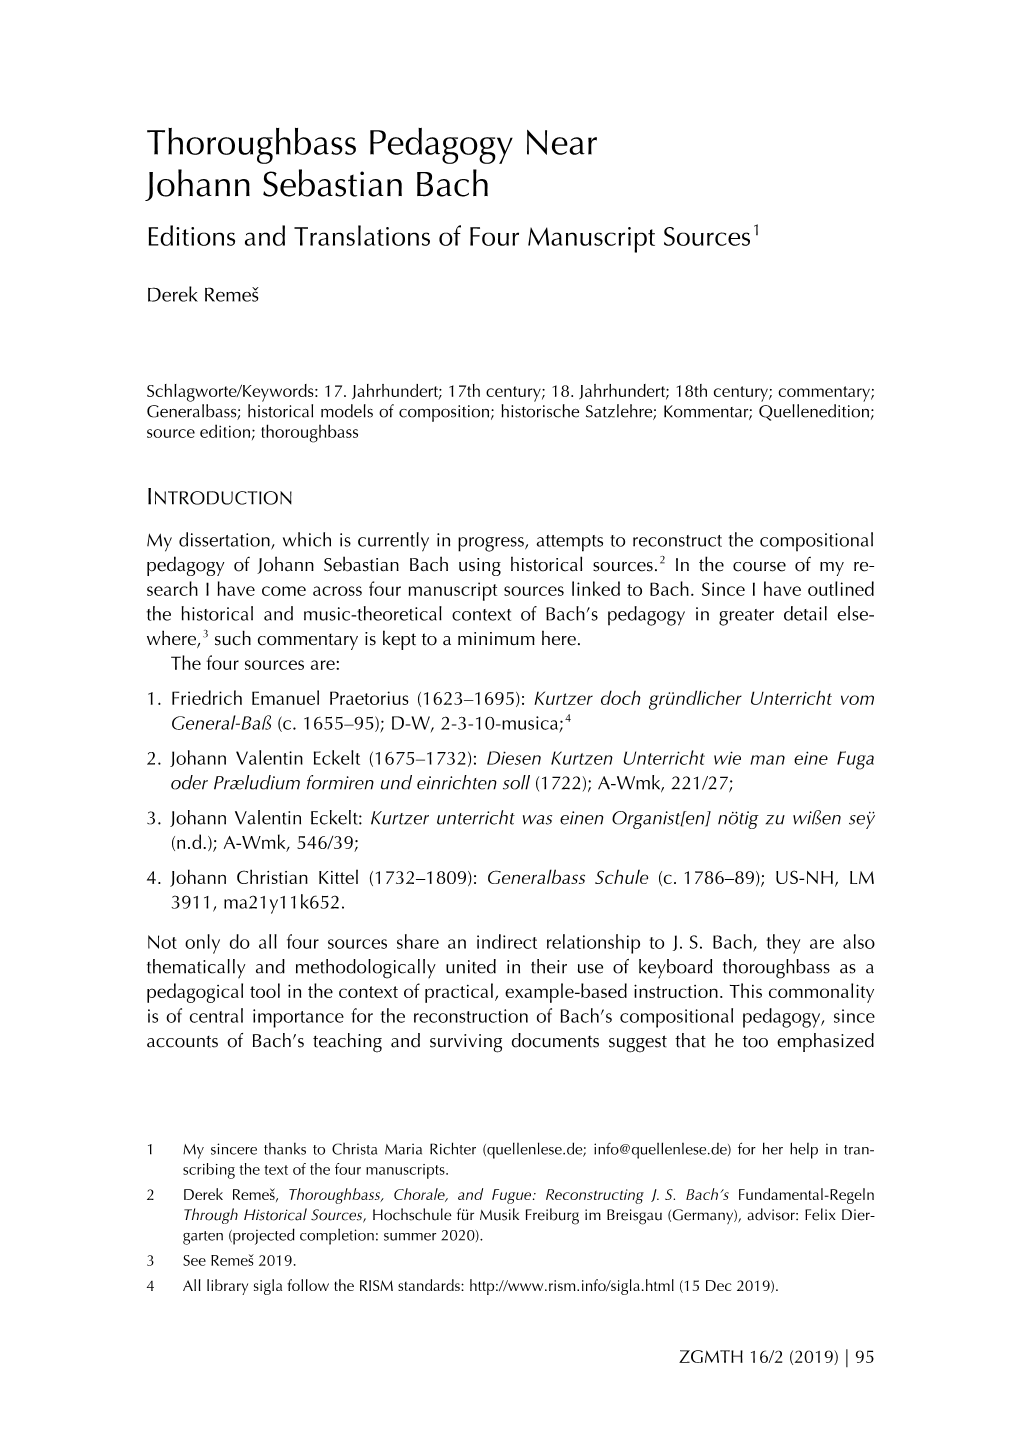 Thoroughbass Pedagogy Near Johann Sebastian Bach. Editions and Translations of Four Manuscript Sources